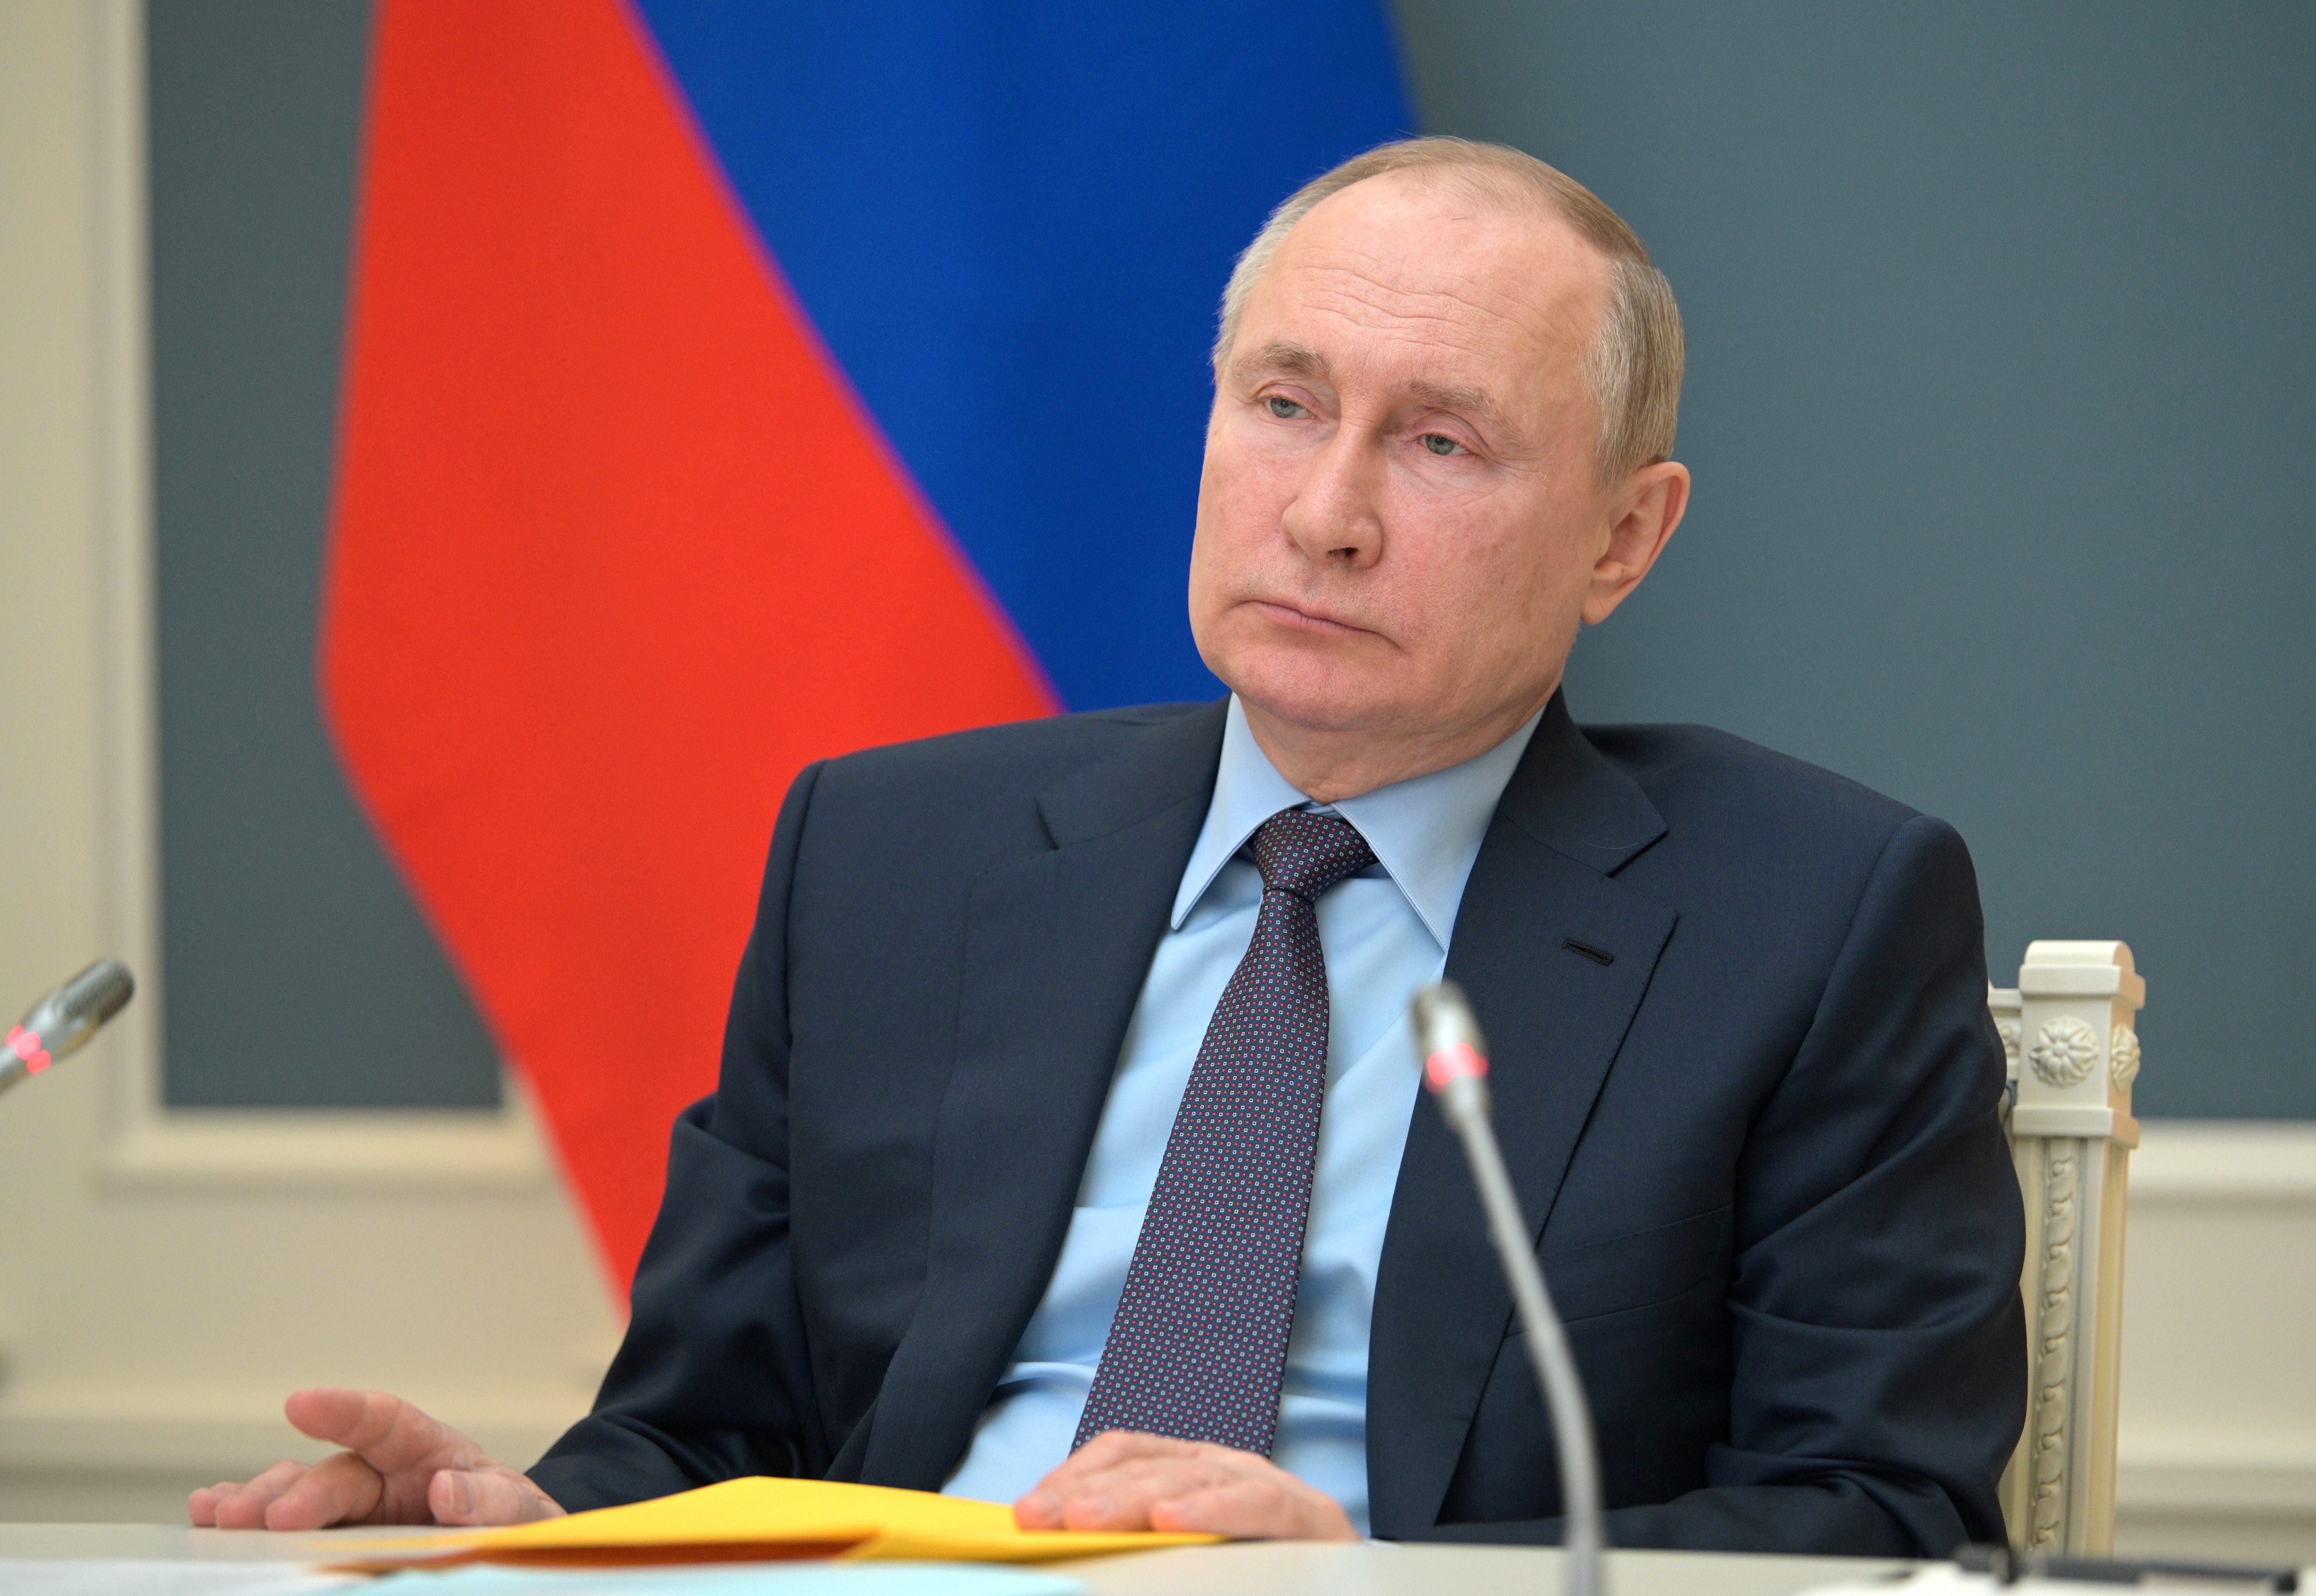 Vladimir Putin self-isolates after COVID-19 detected in entourage – Kremlin